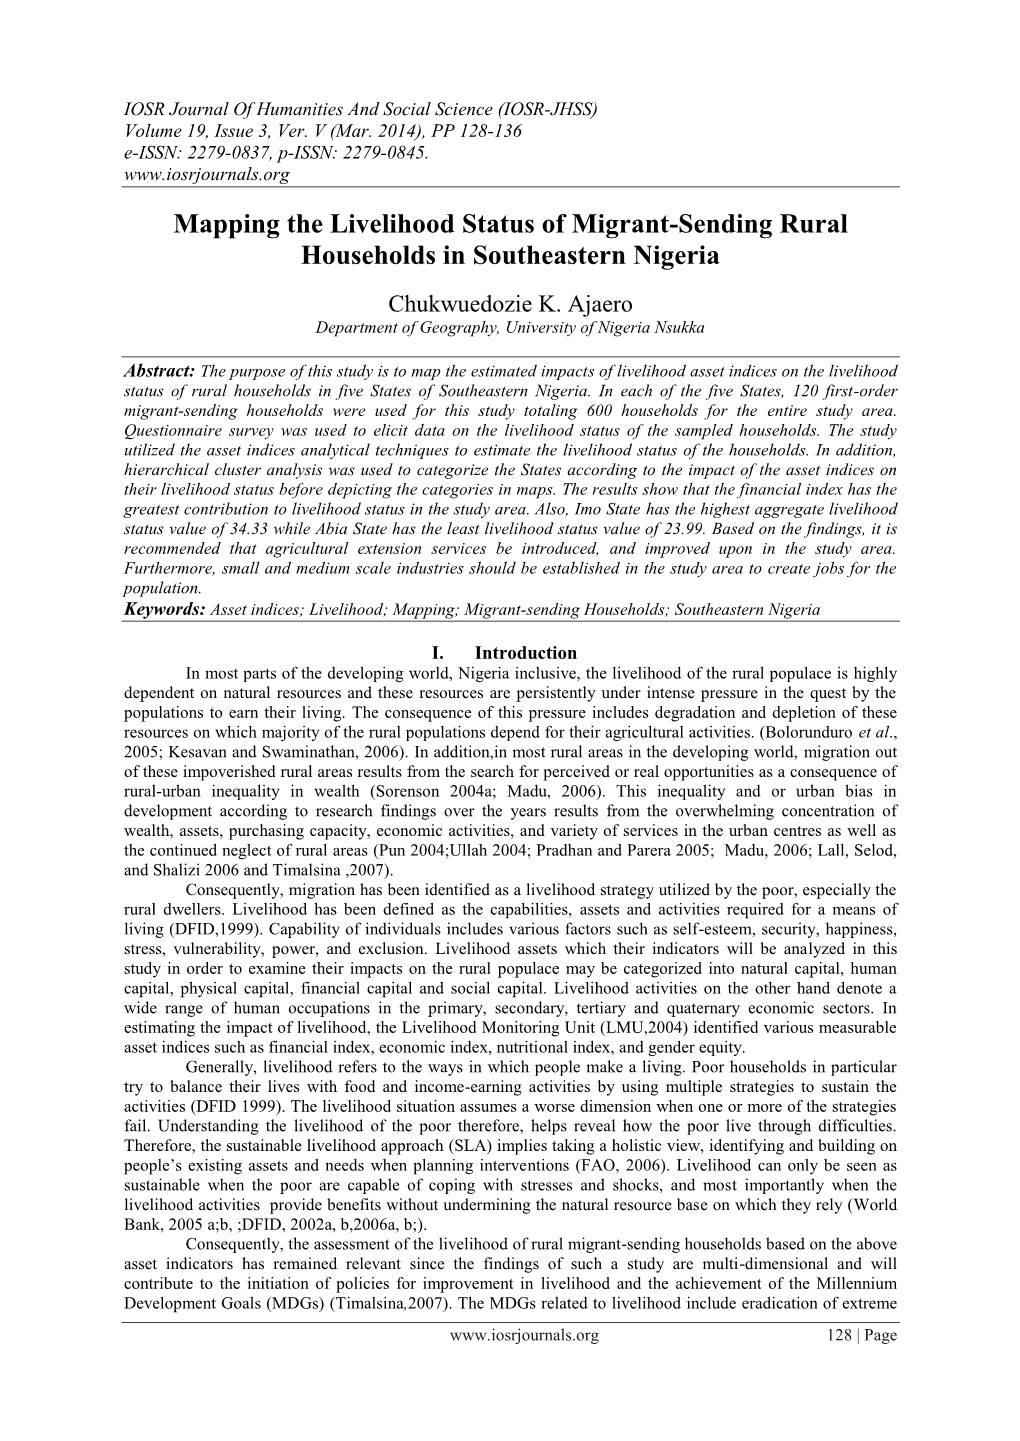 Mapping the Livelihood Status of Migrant-Sending Rural Households in Southeastern Nigeria